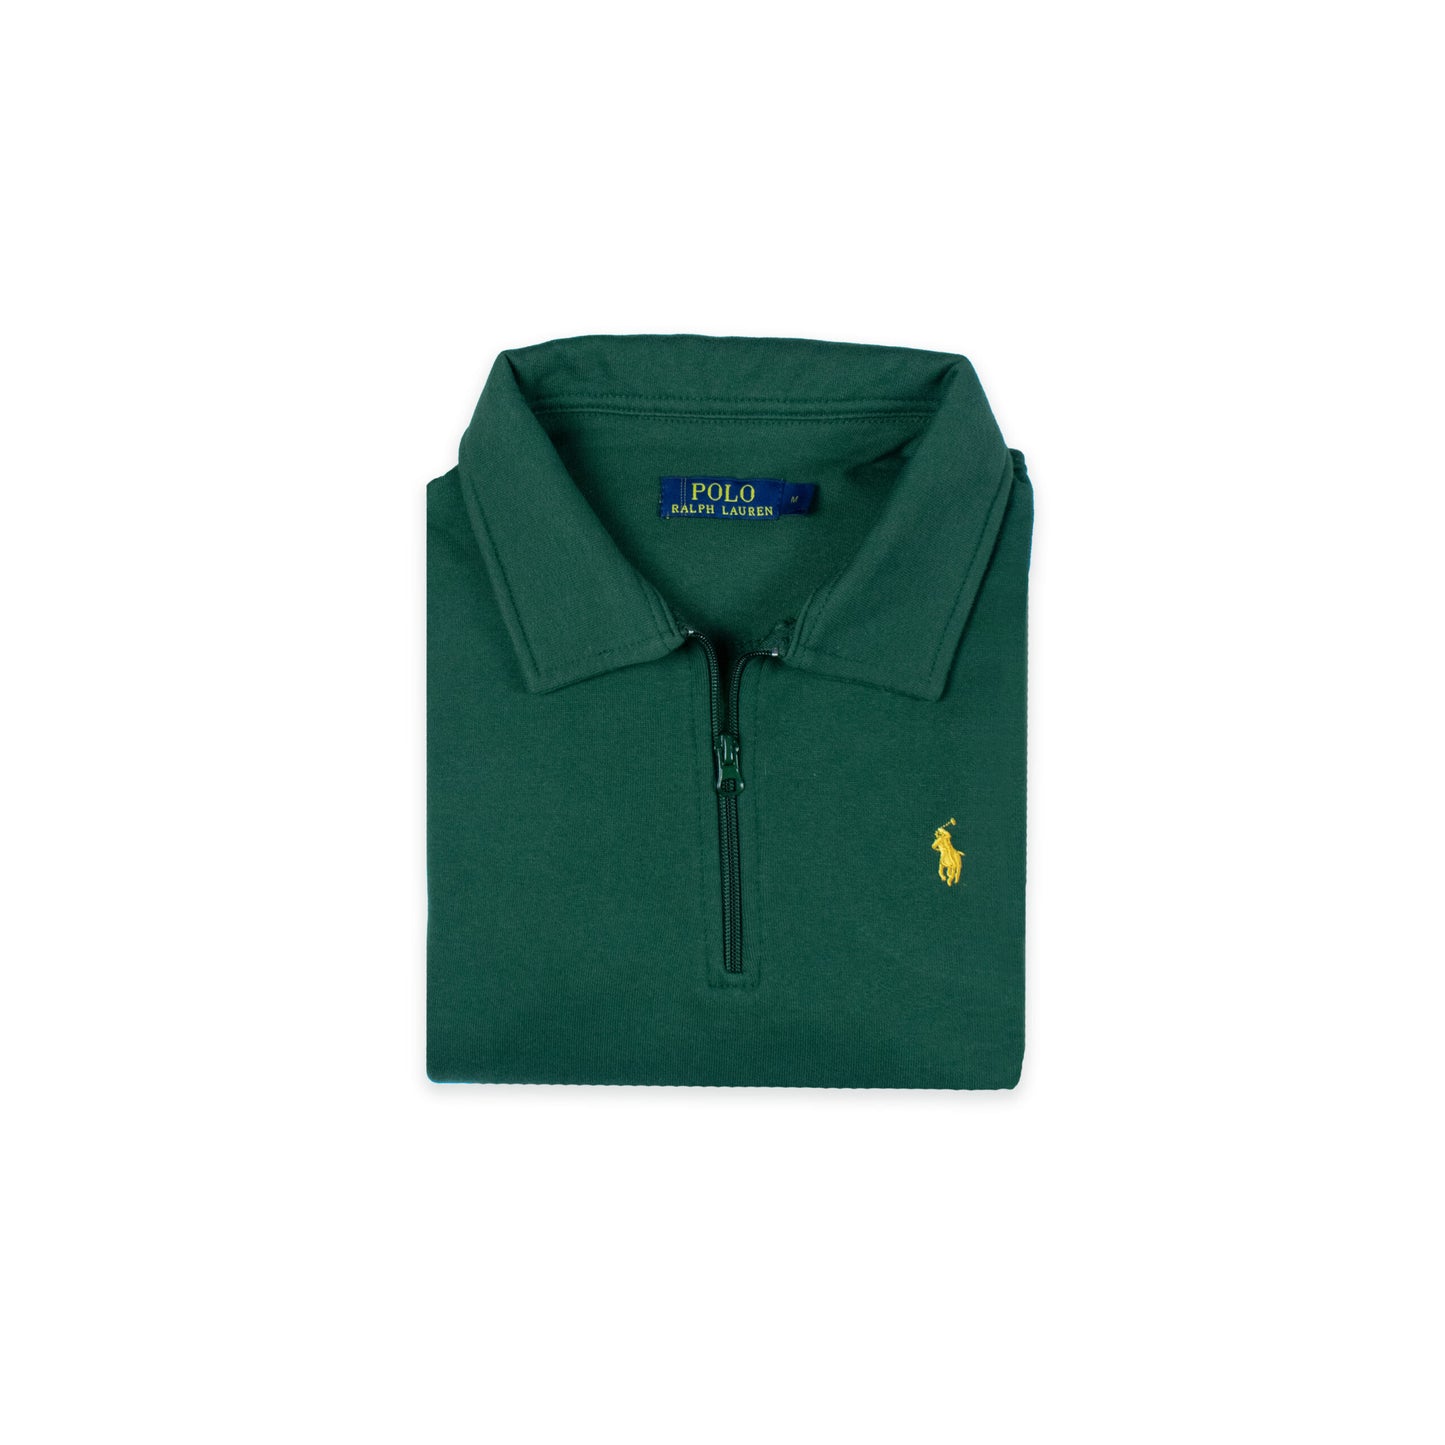 RL Premium Half Zipped Fleece Sweatshirt – Green